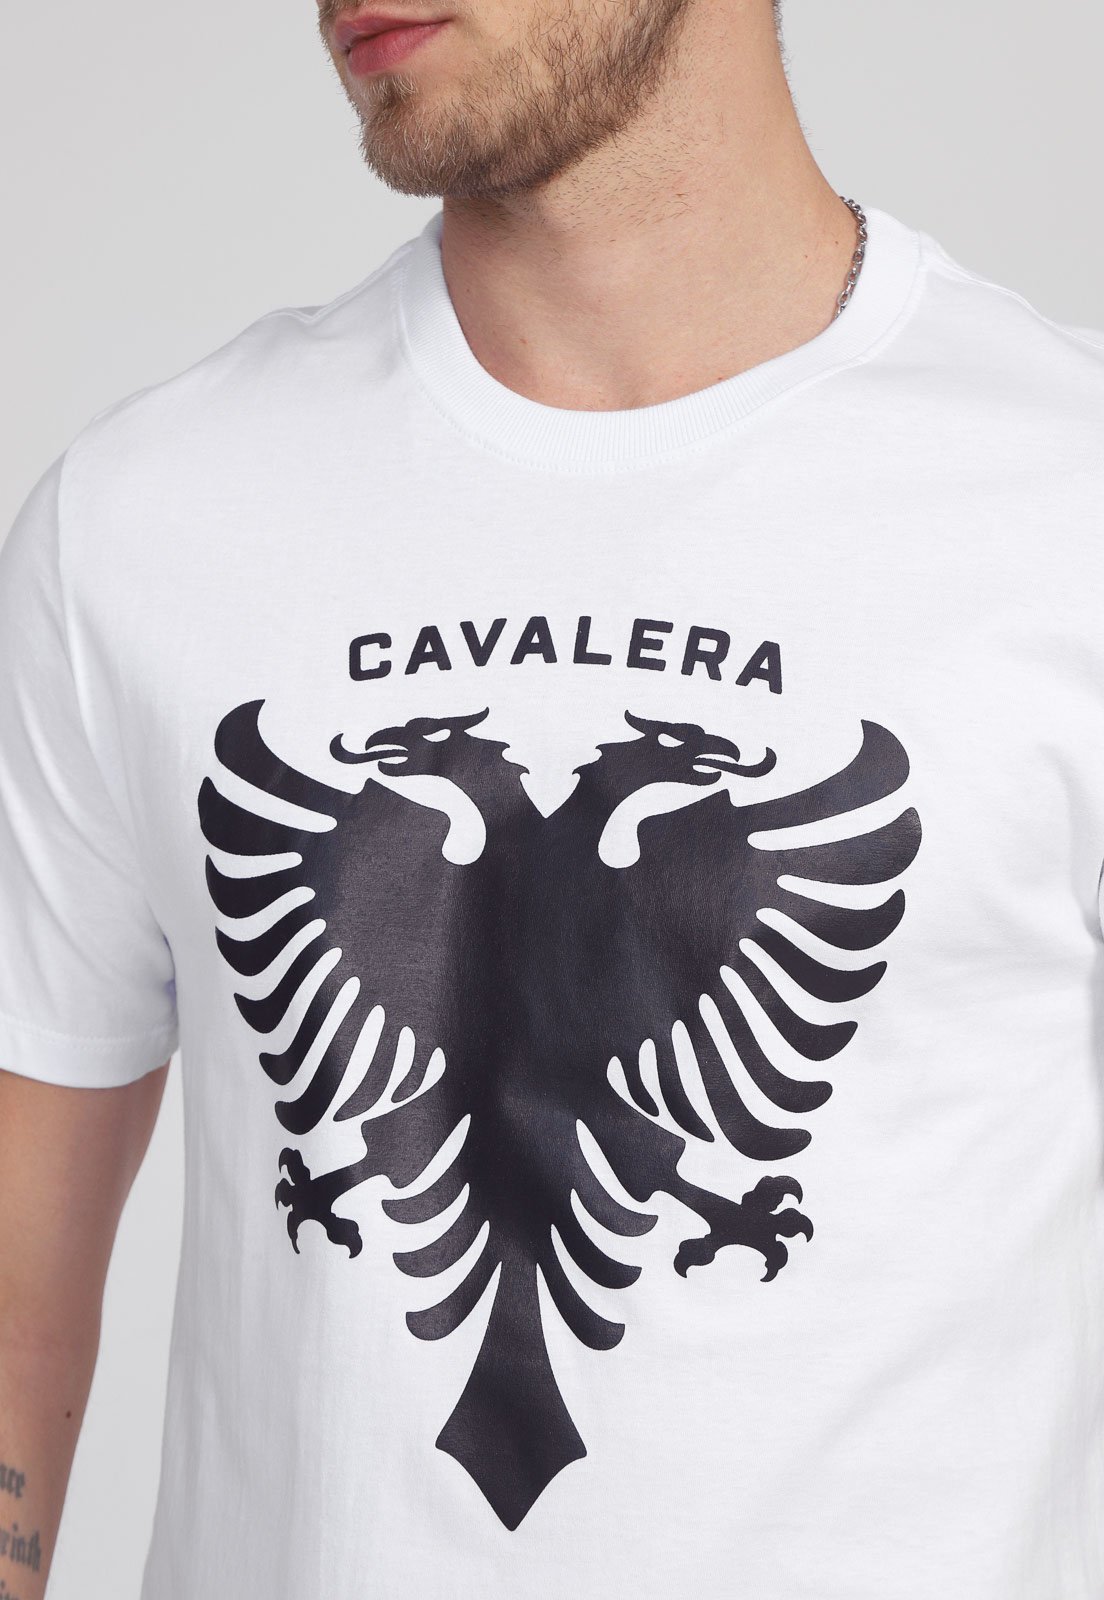 Camiseta Cavalera Masculina Águia Calçada SP - Branca - Masculina